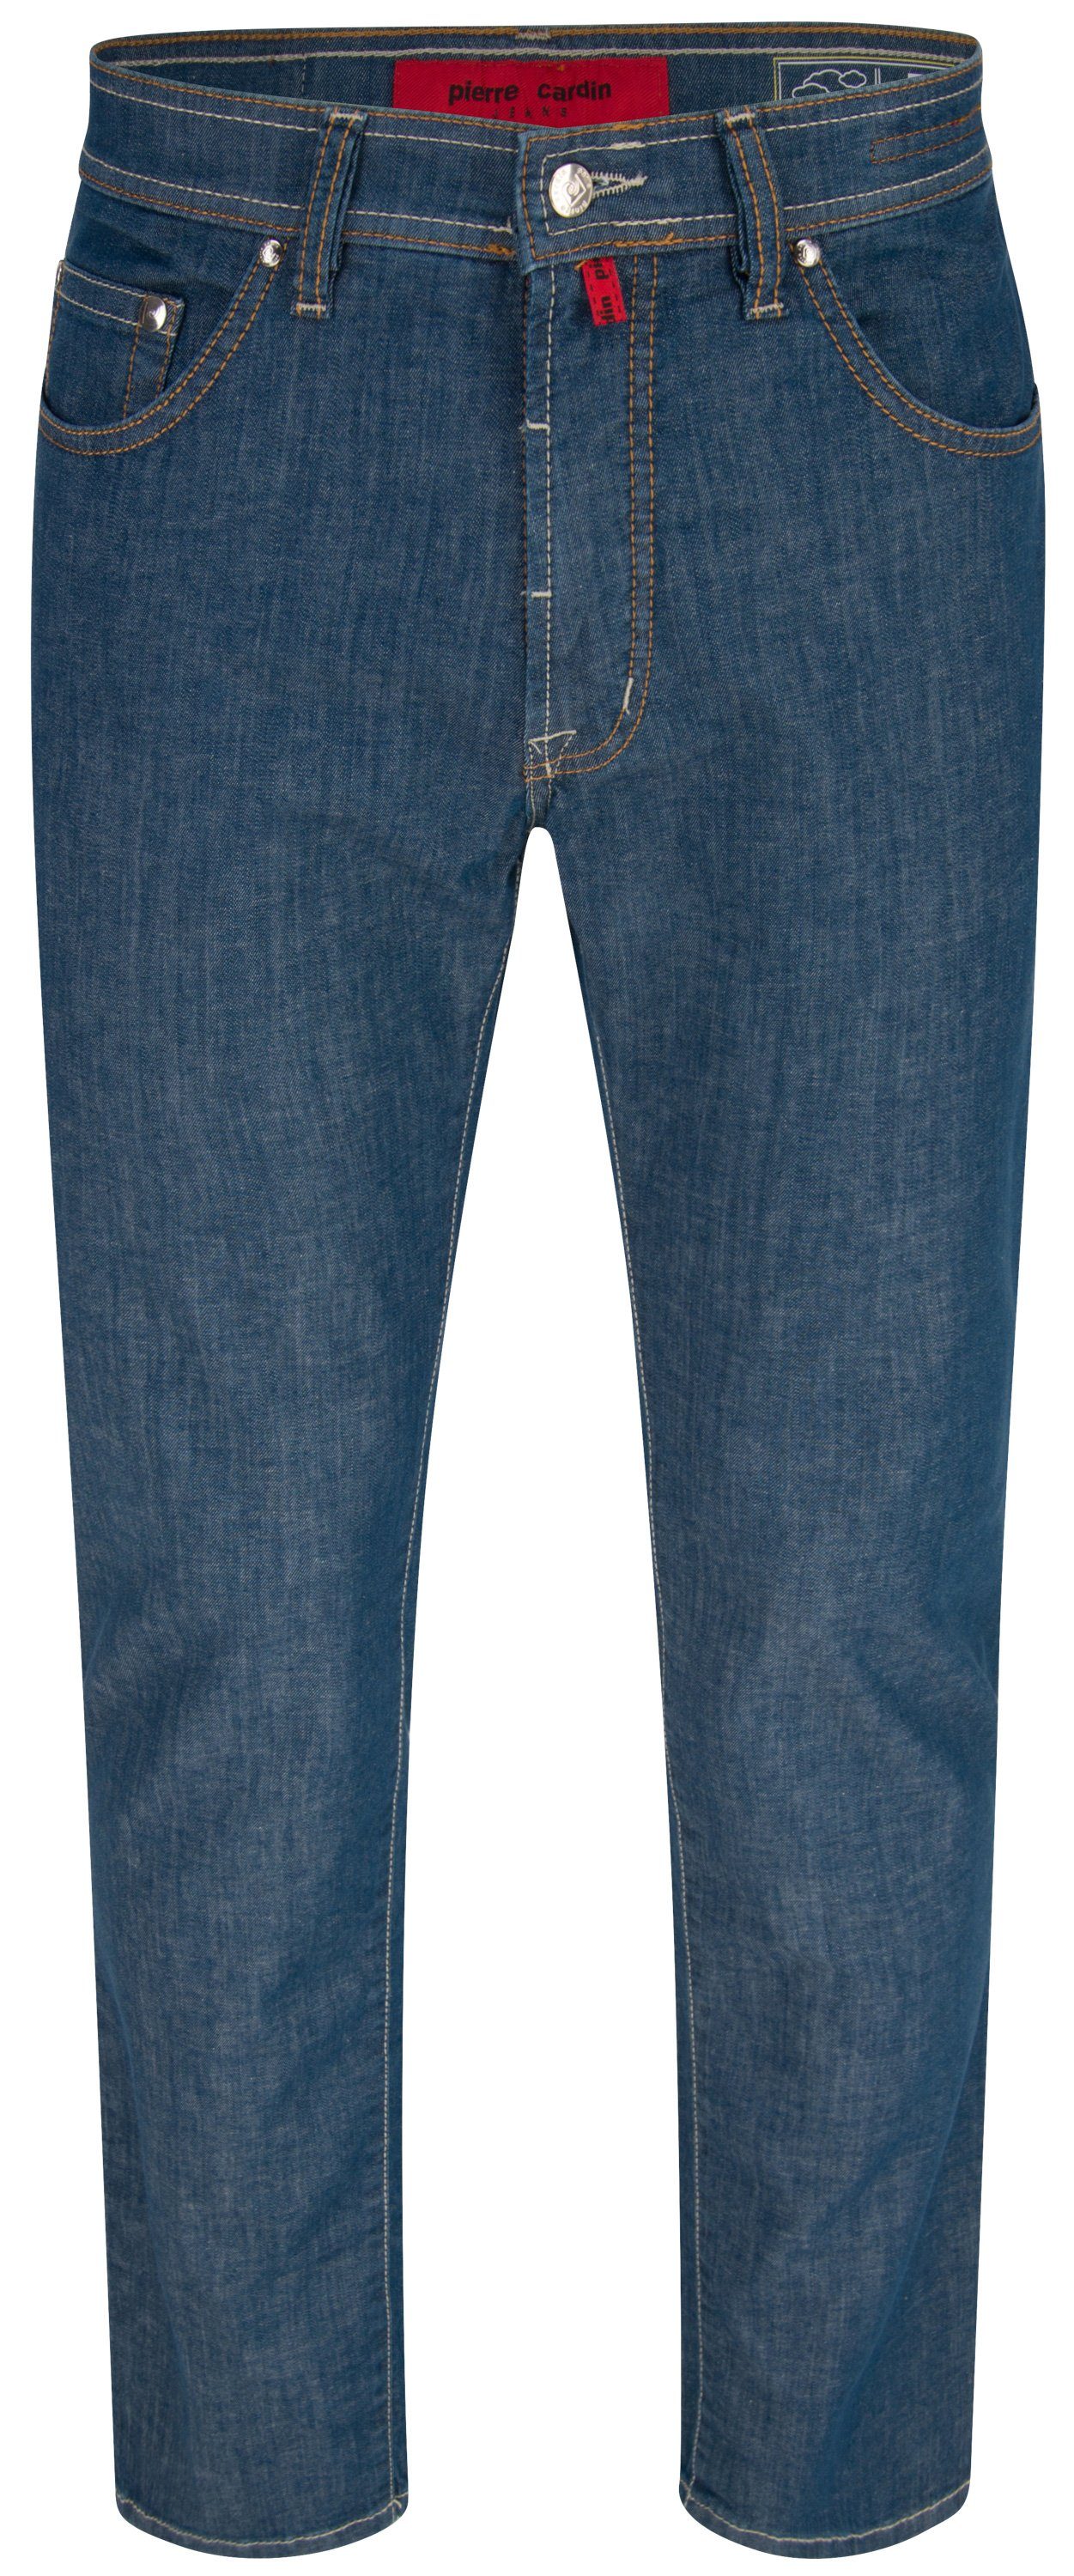 Pierre Cardin 5-Pocket-Jeans PIERRE CARDIN DEAUVILLE summer air touch dove blue 31961 7330.08